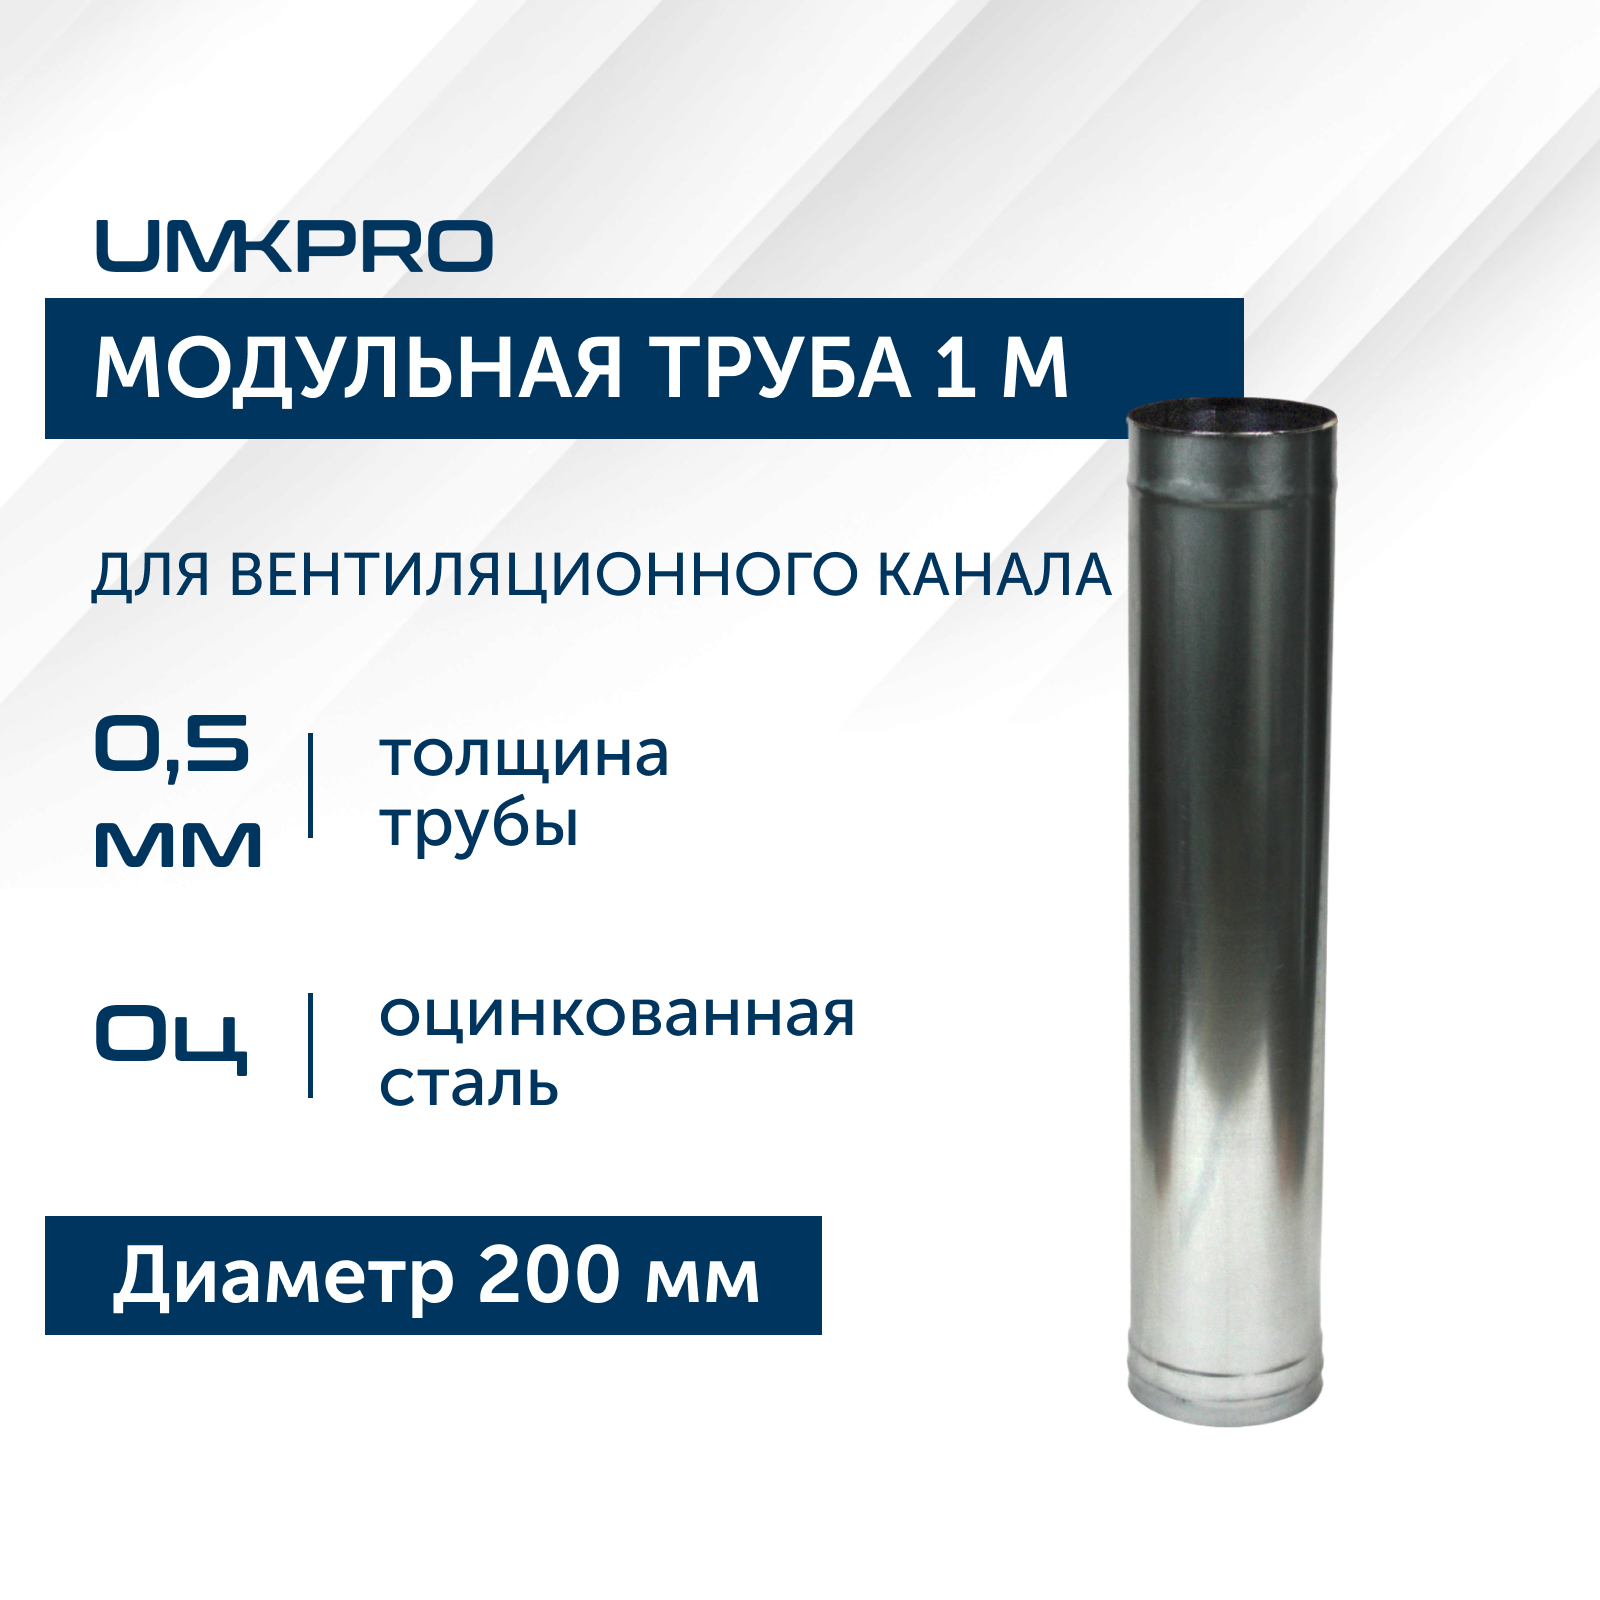 Труба модульная для дымохода 1 м UMKPRO, D 200, Оц/0,5мм модульная прихожая корвет 25